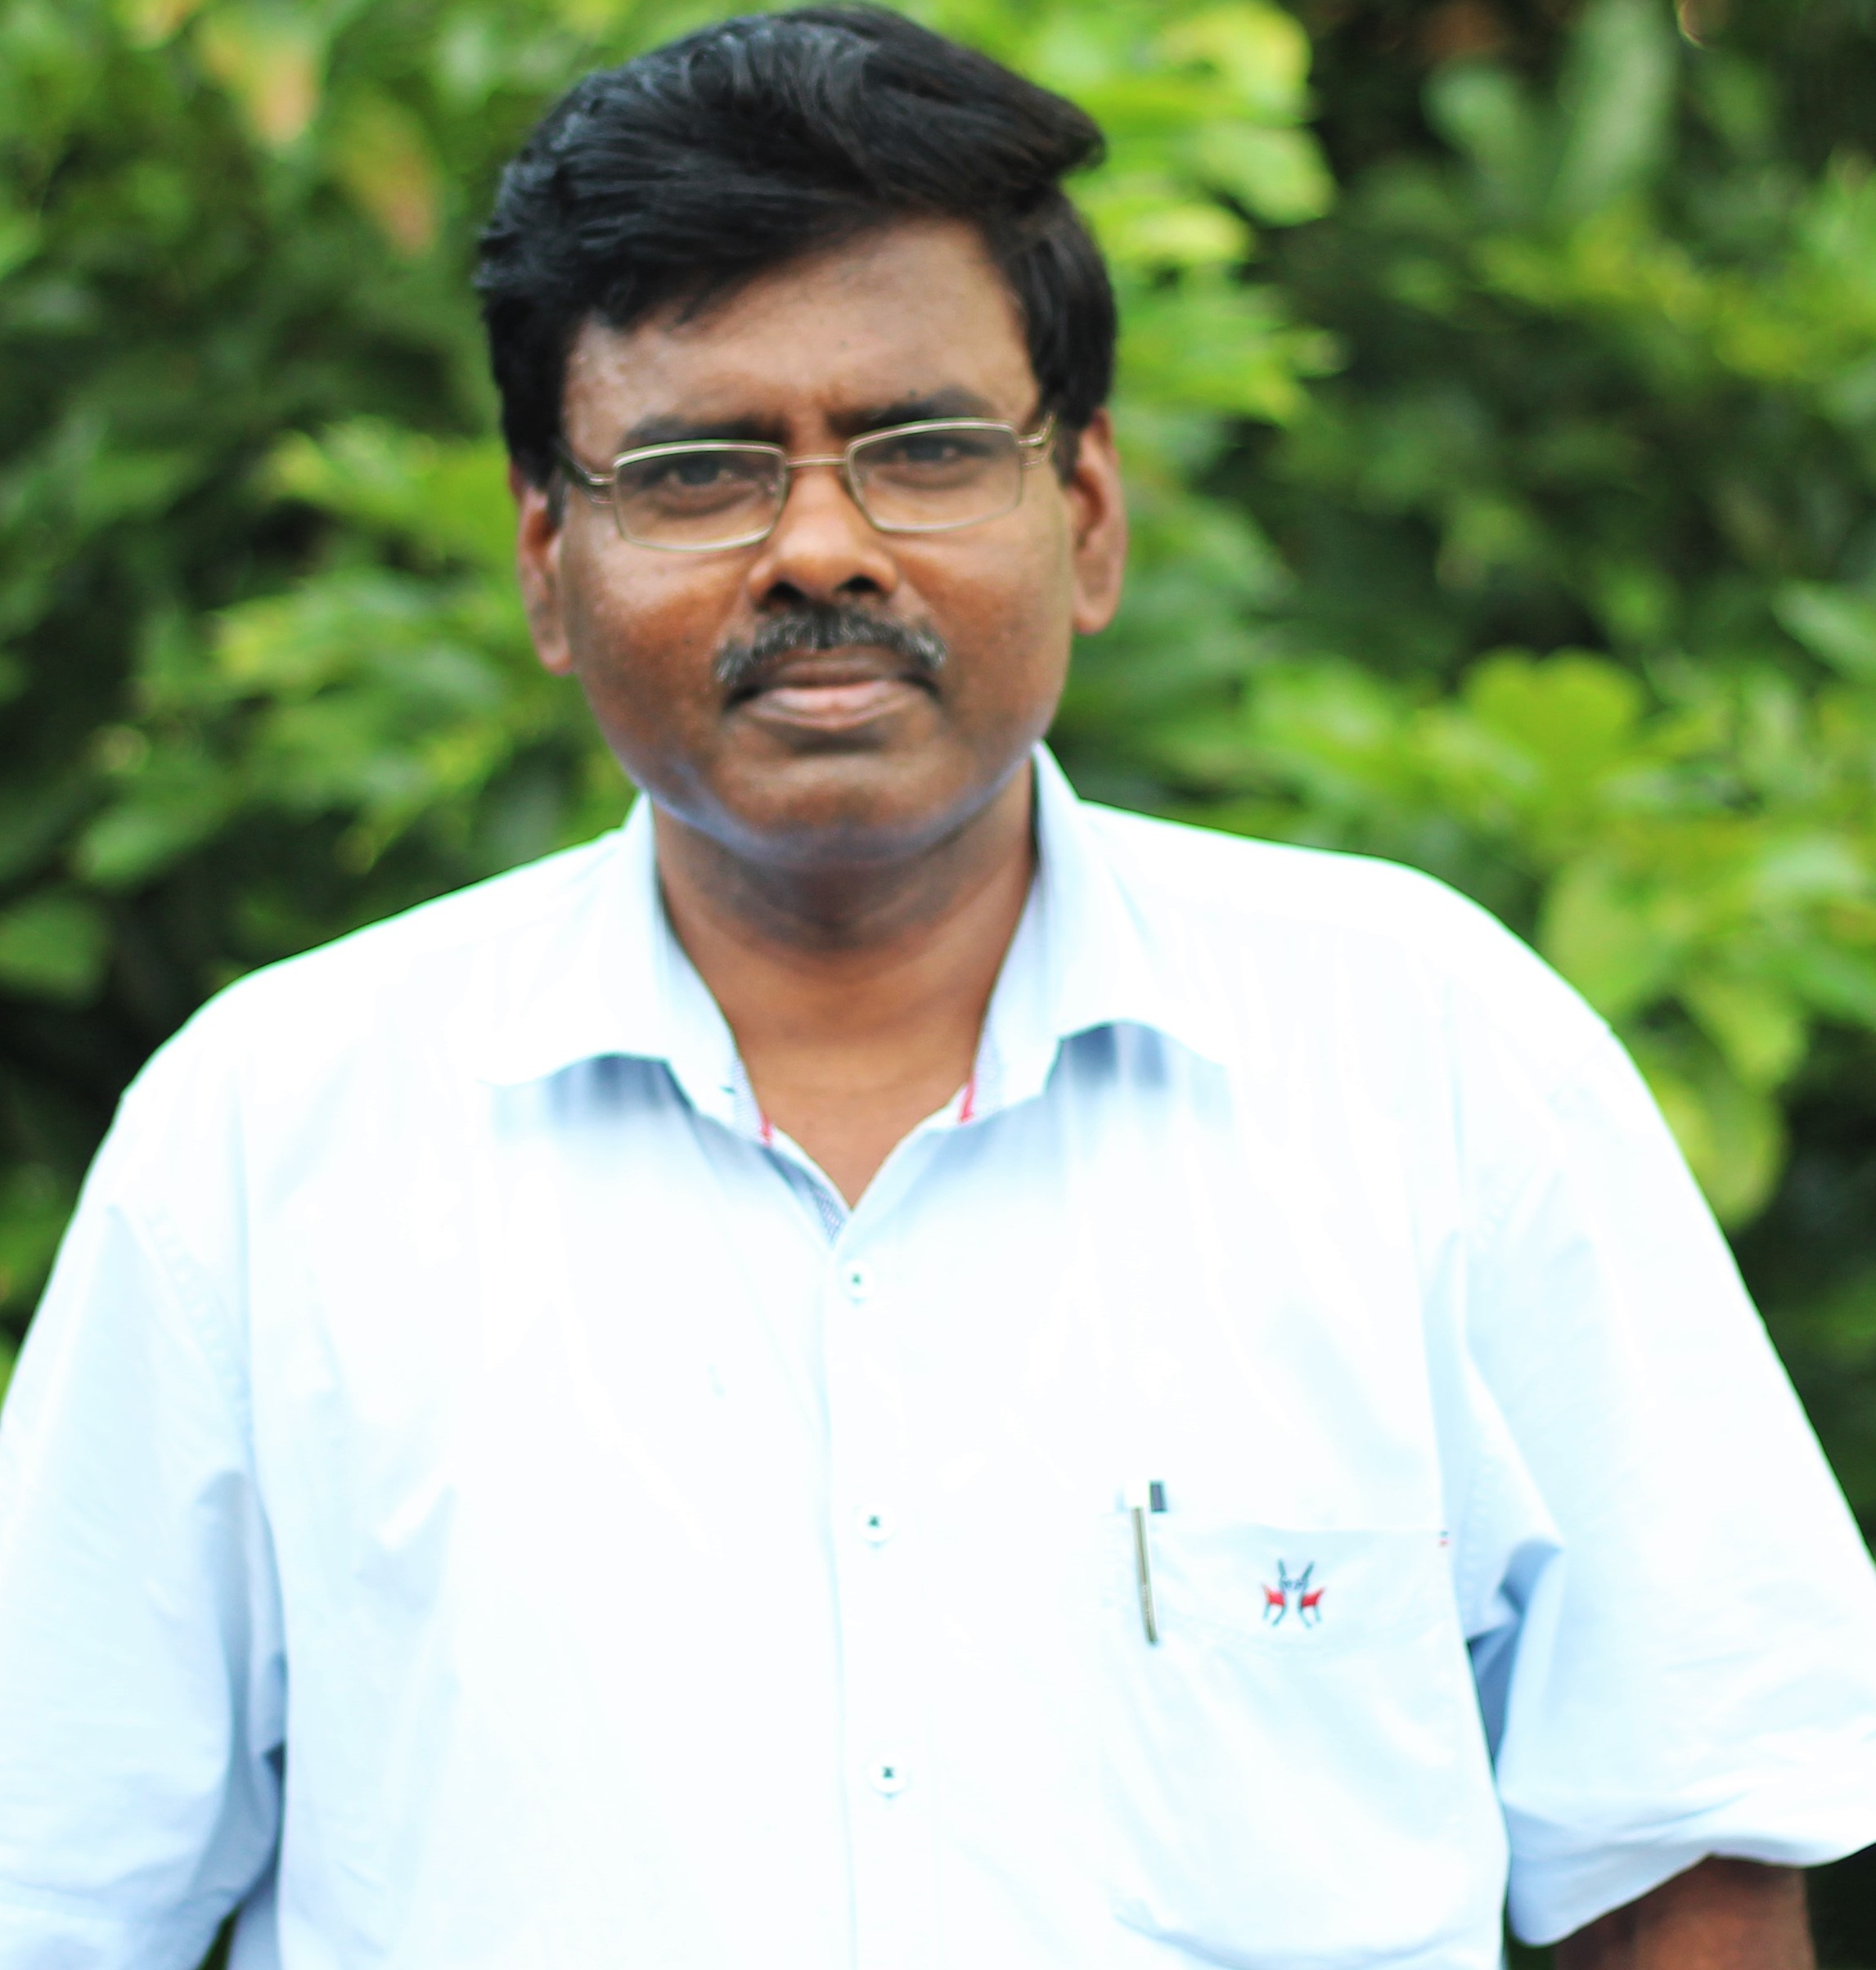 Prof. Tharmalingam Punniyamurthy